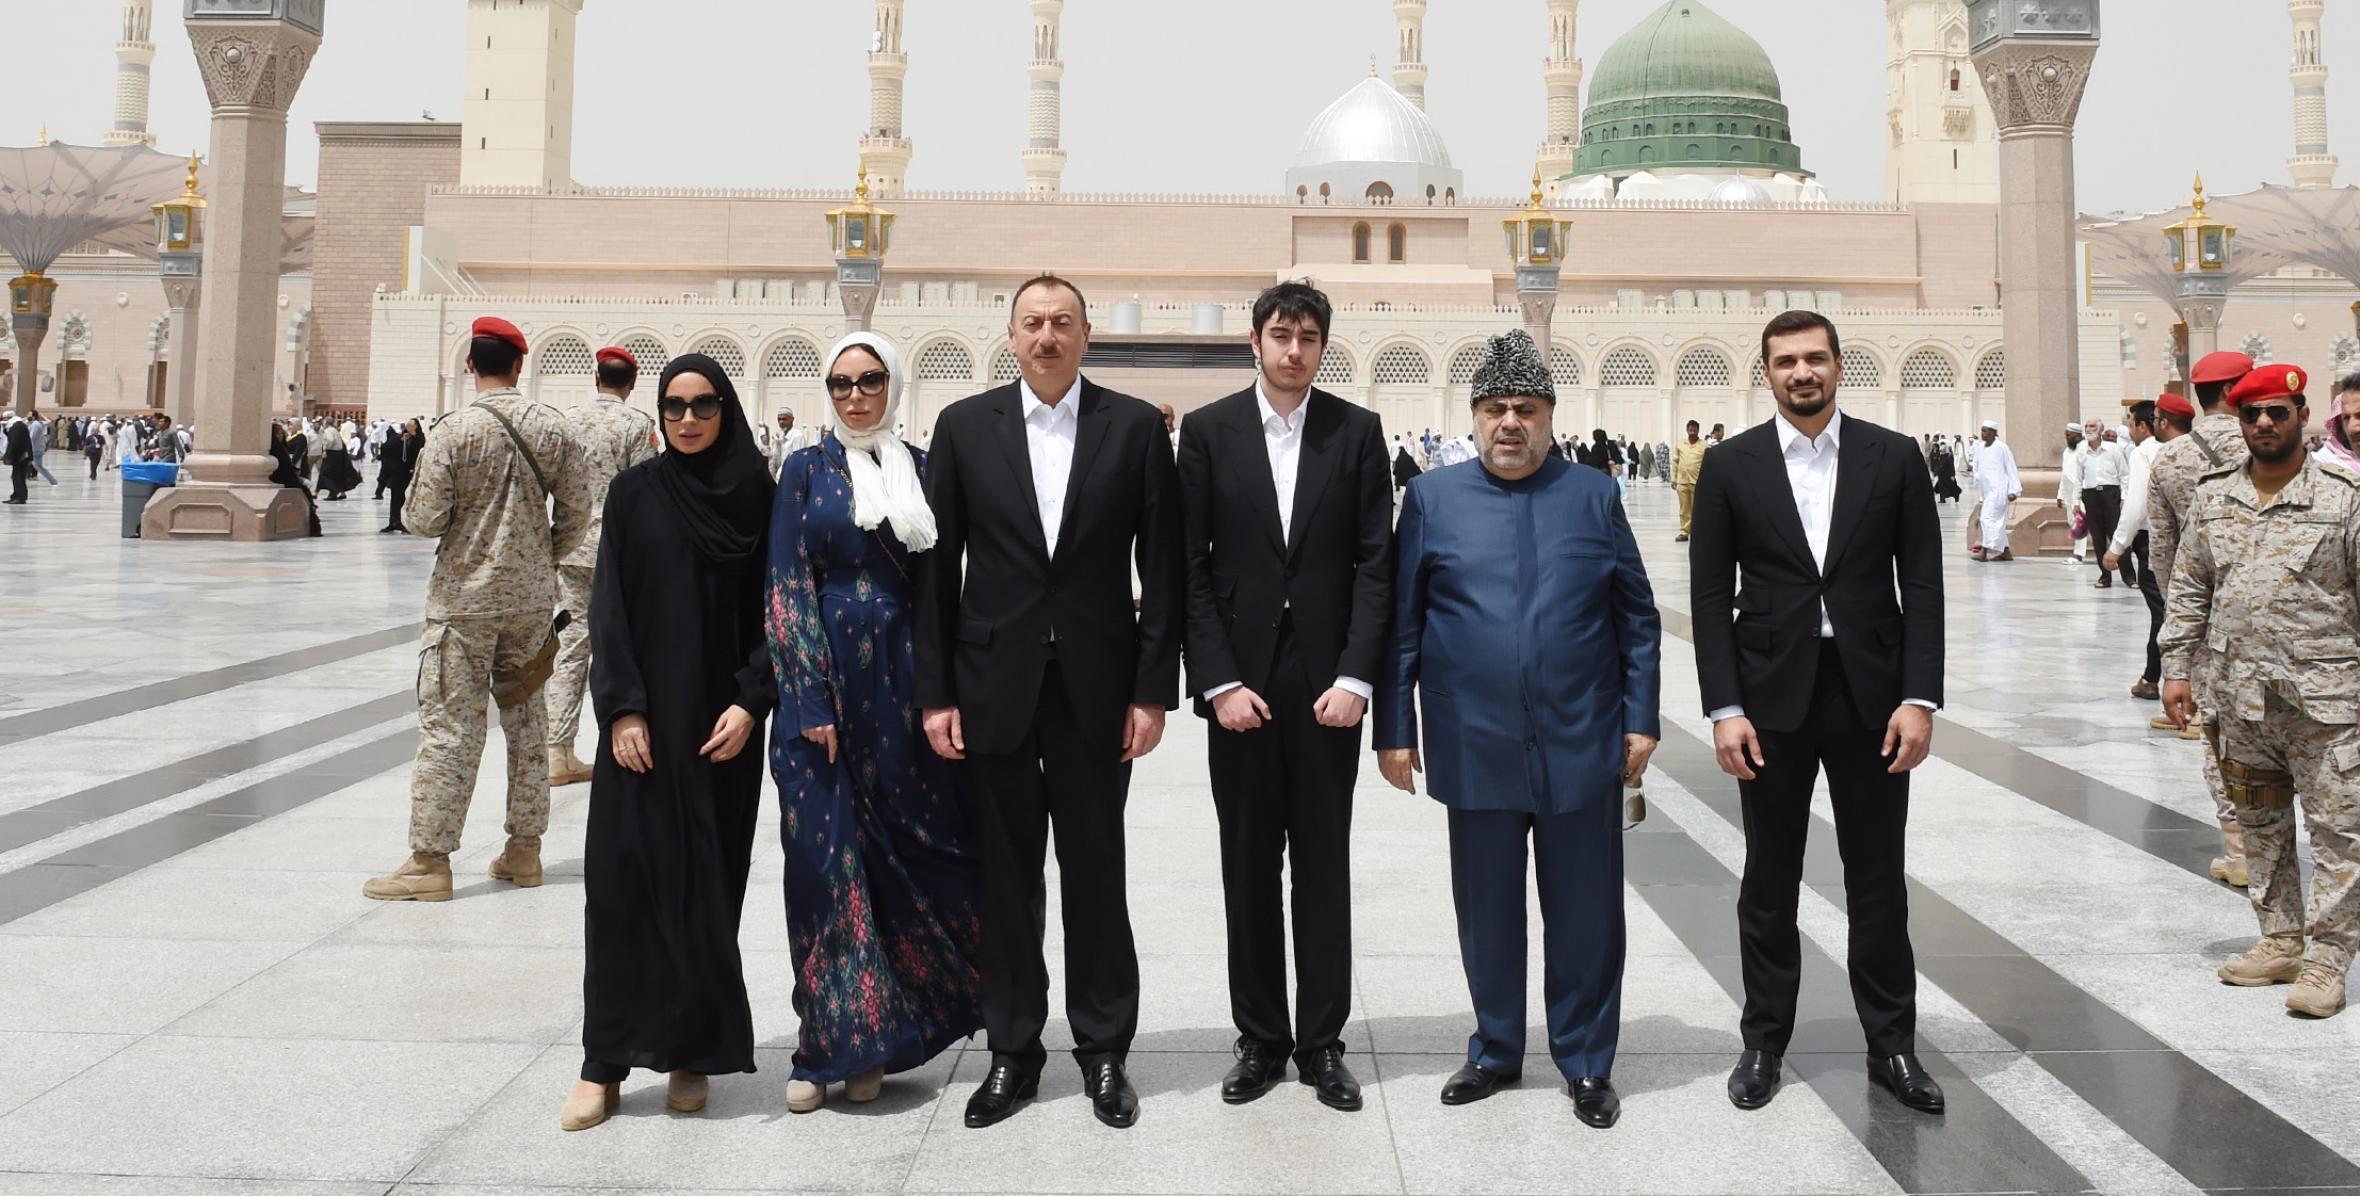 Ilham Aliyev visited the Prophet's Mosque in Medina